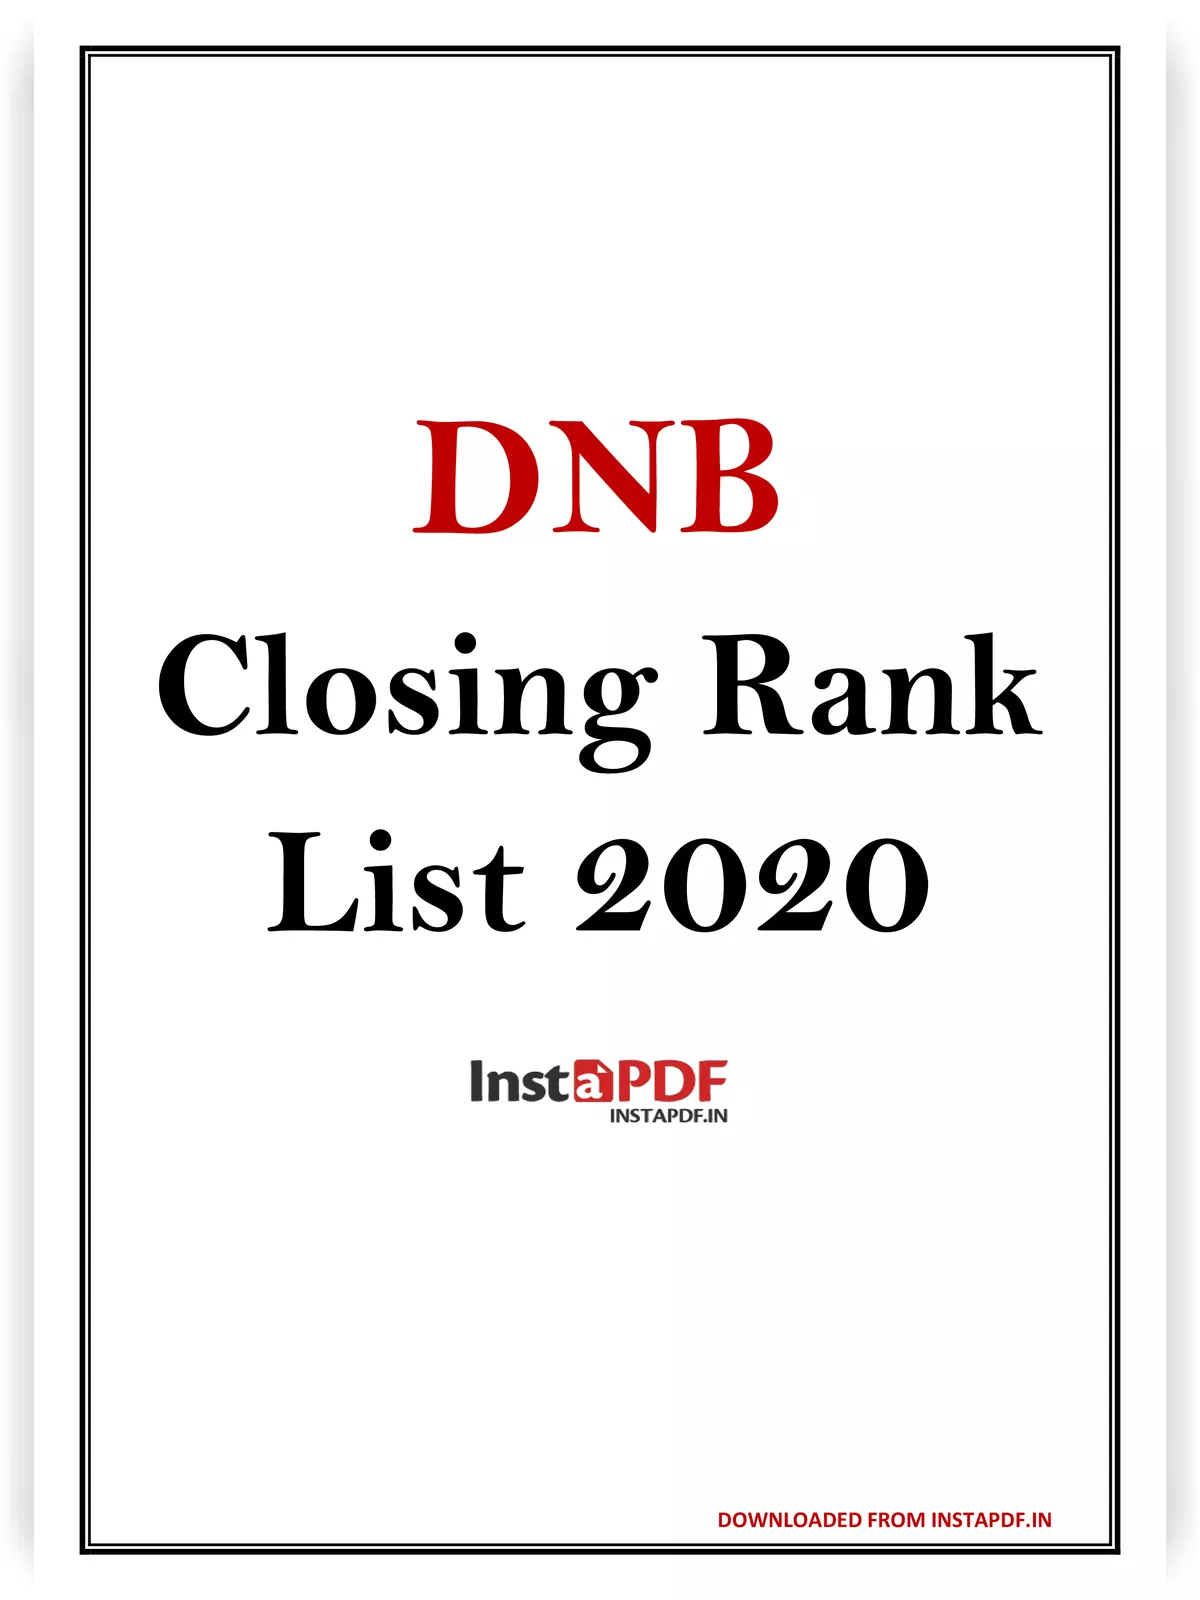 DNB Closing Rank List 2020